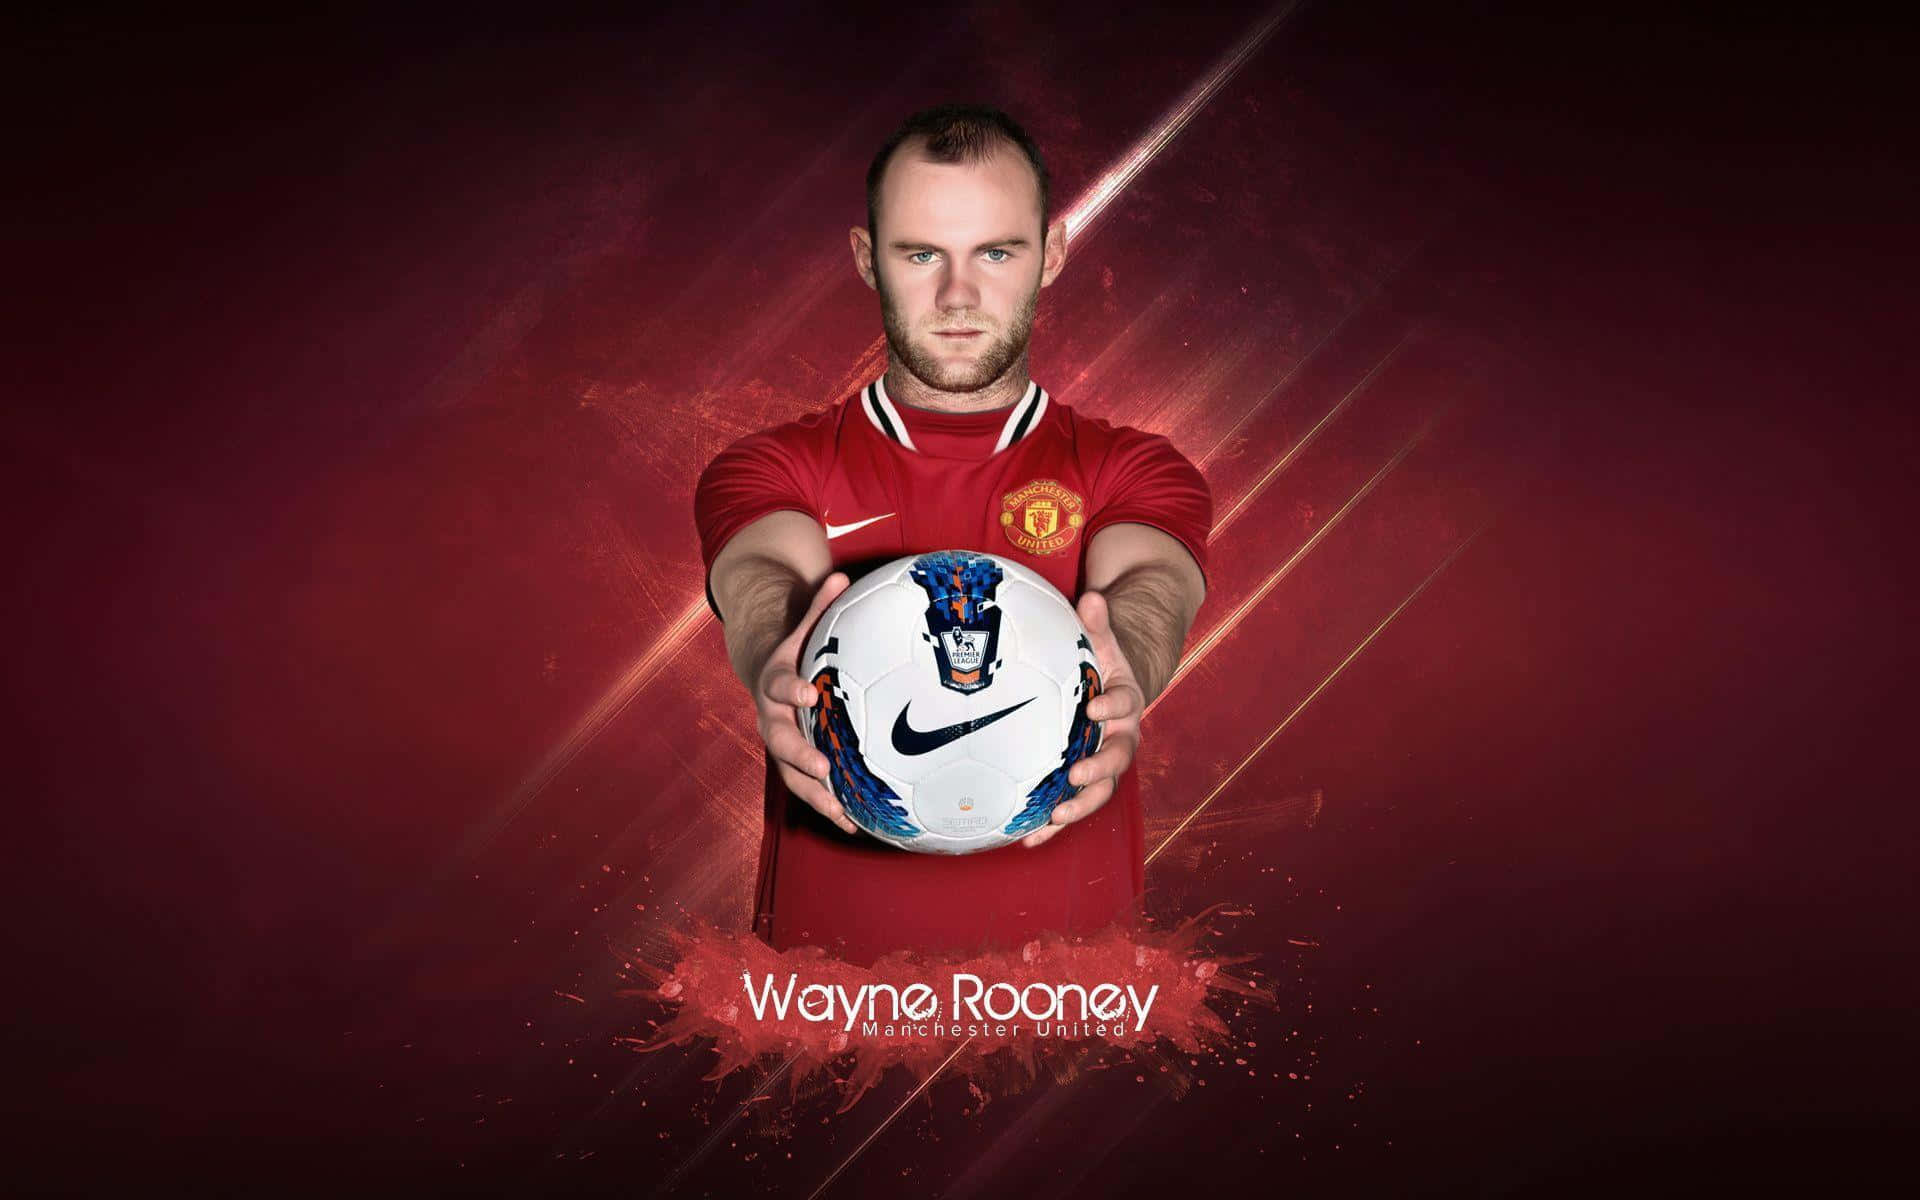 Wayne Rooney Nike Ball Picture